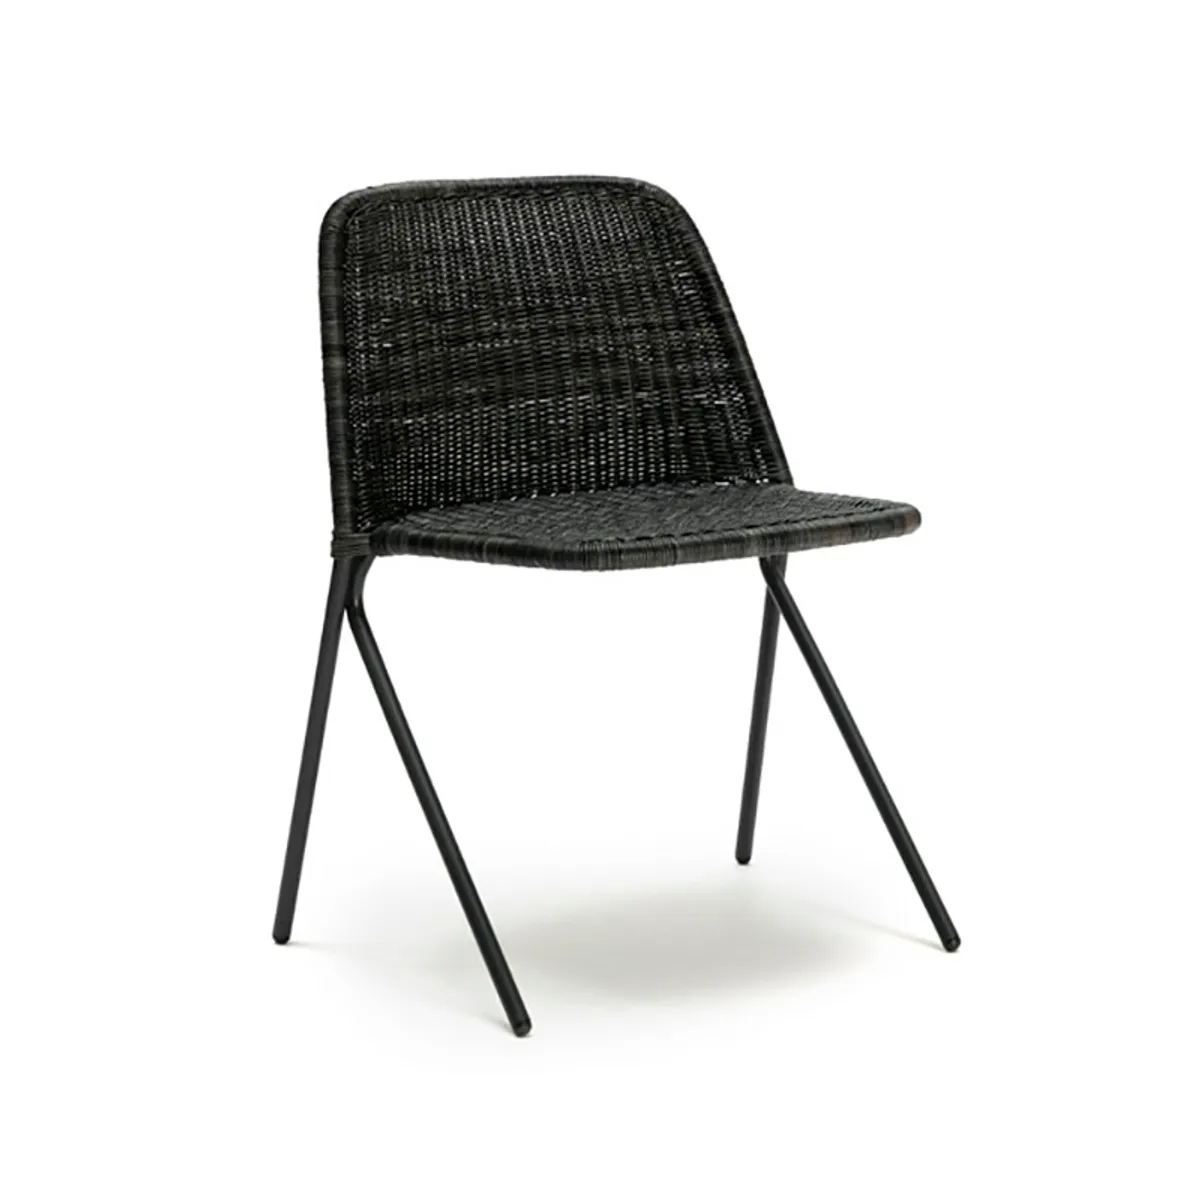 Persi Chair Lead Grey Rattan And Metal Furniture For Furnishing Healthcare J